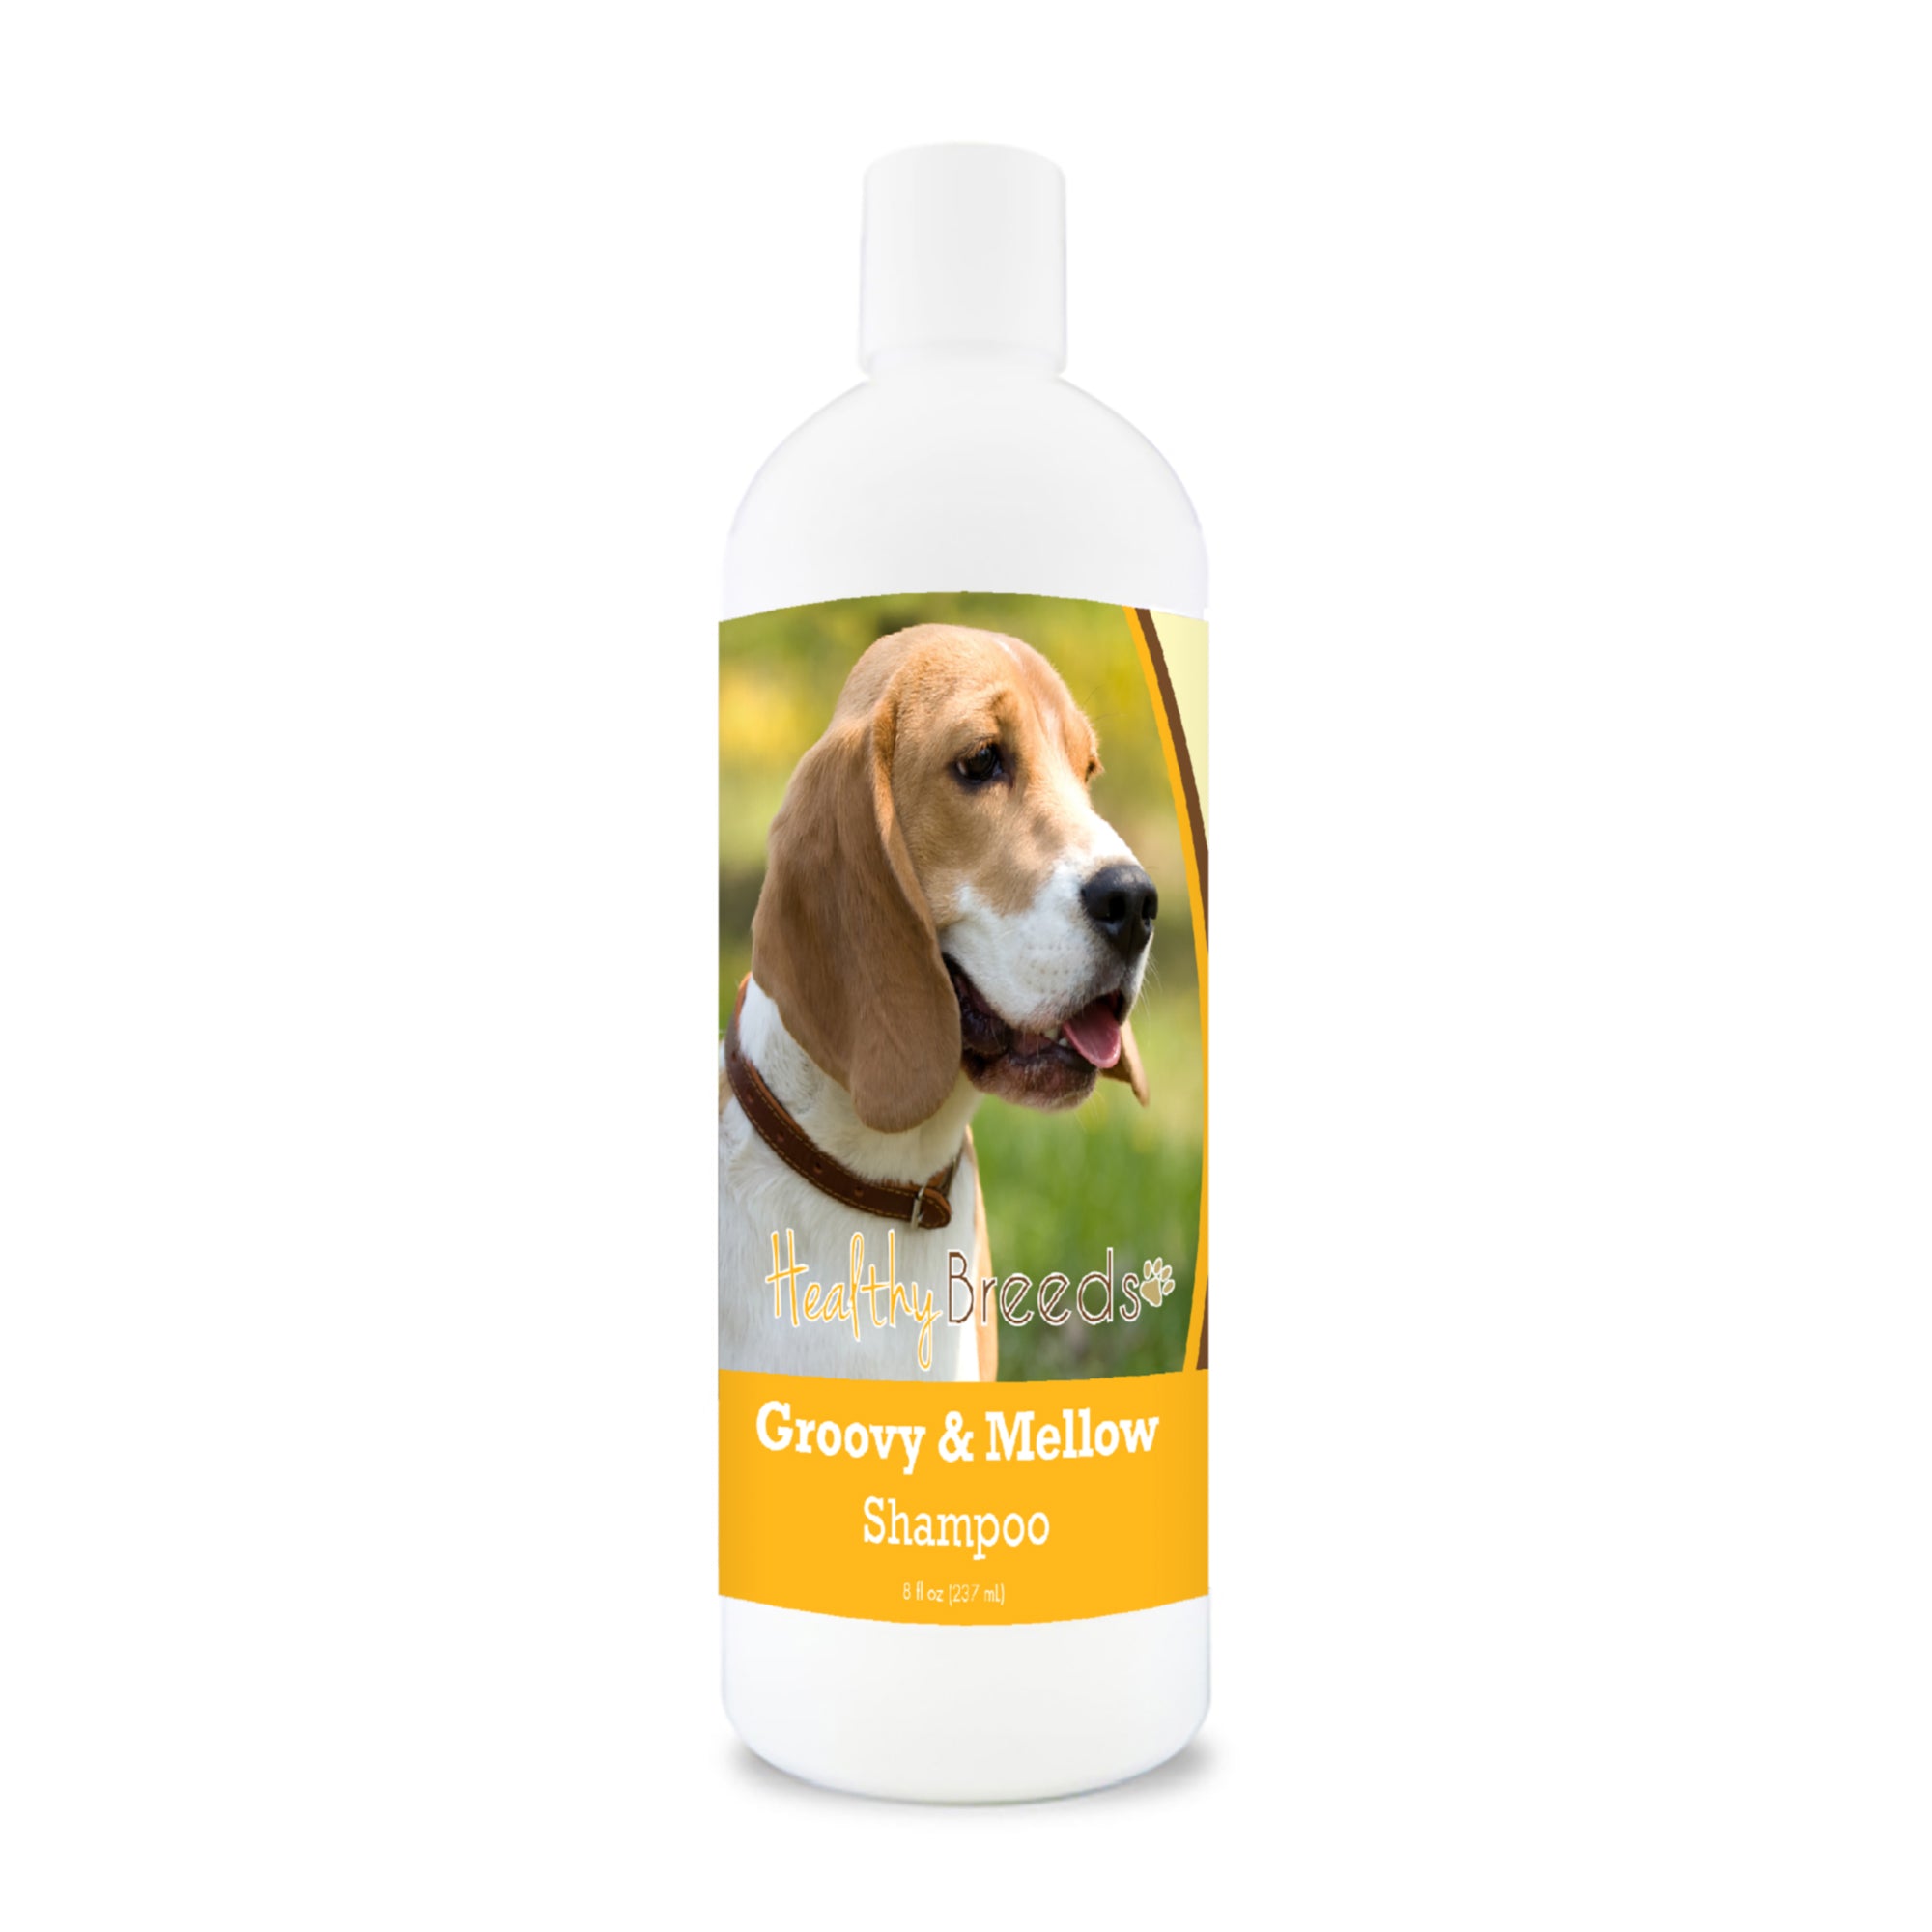 Beagle Groovy & Mellow Shampoo 8 oz